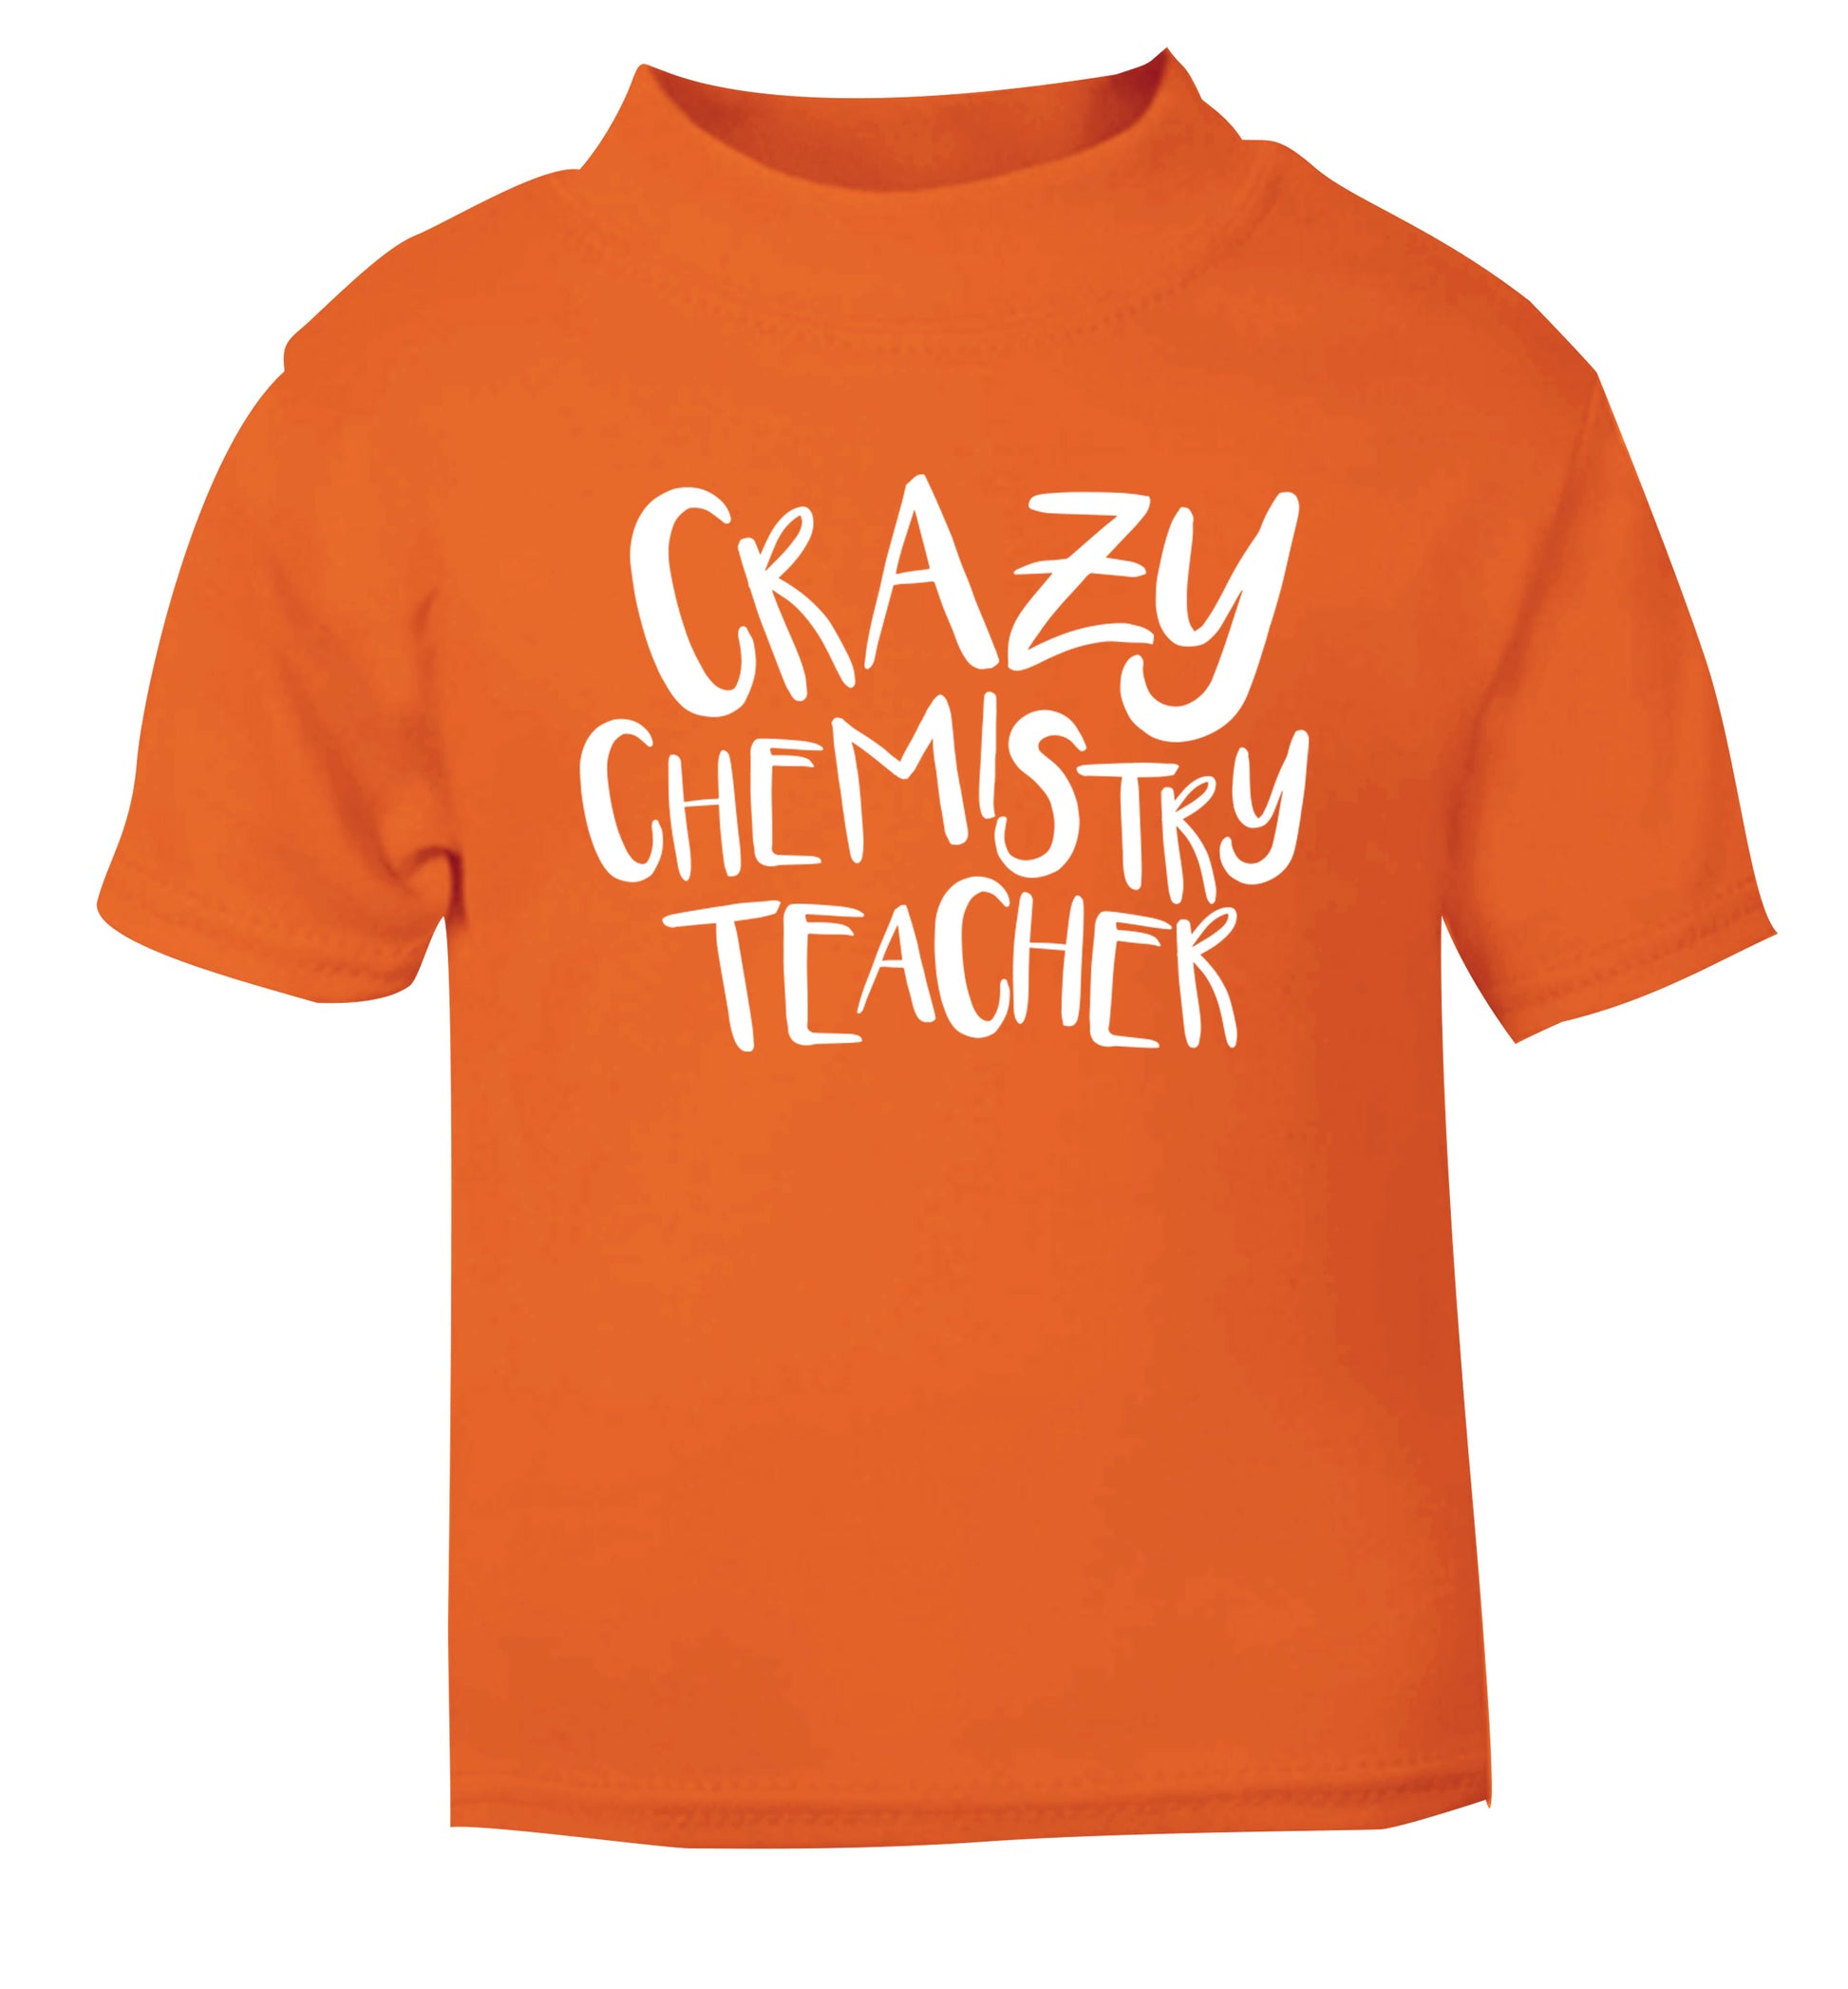 Crazy chemistry teacher orange Baby Toddler Tshirt 2 Years